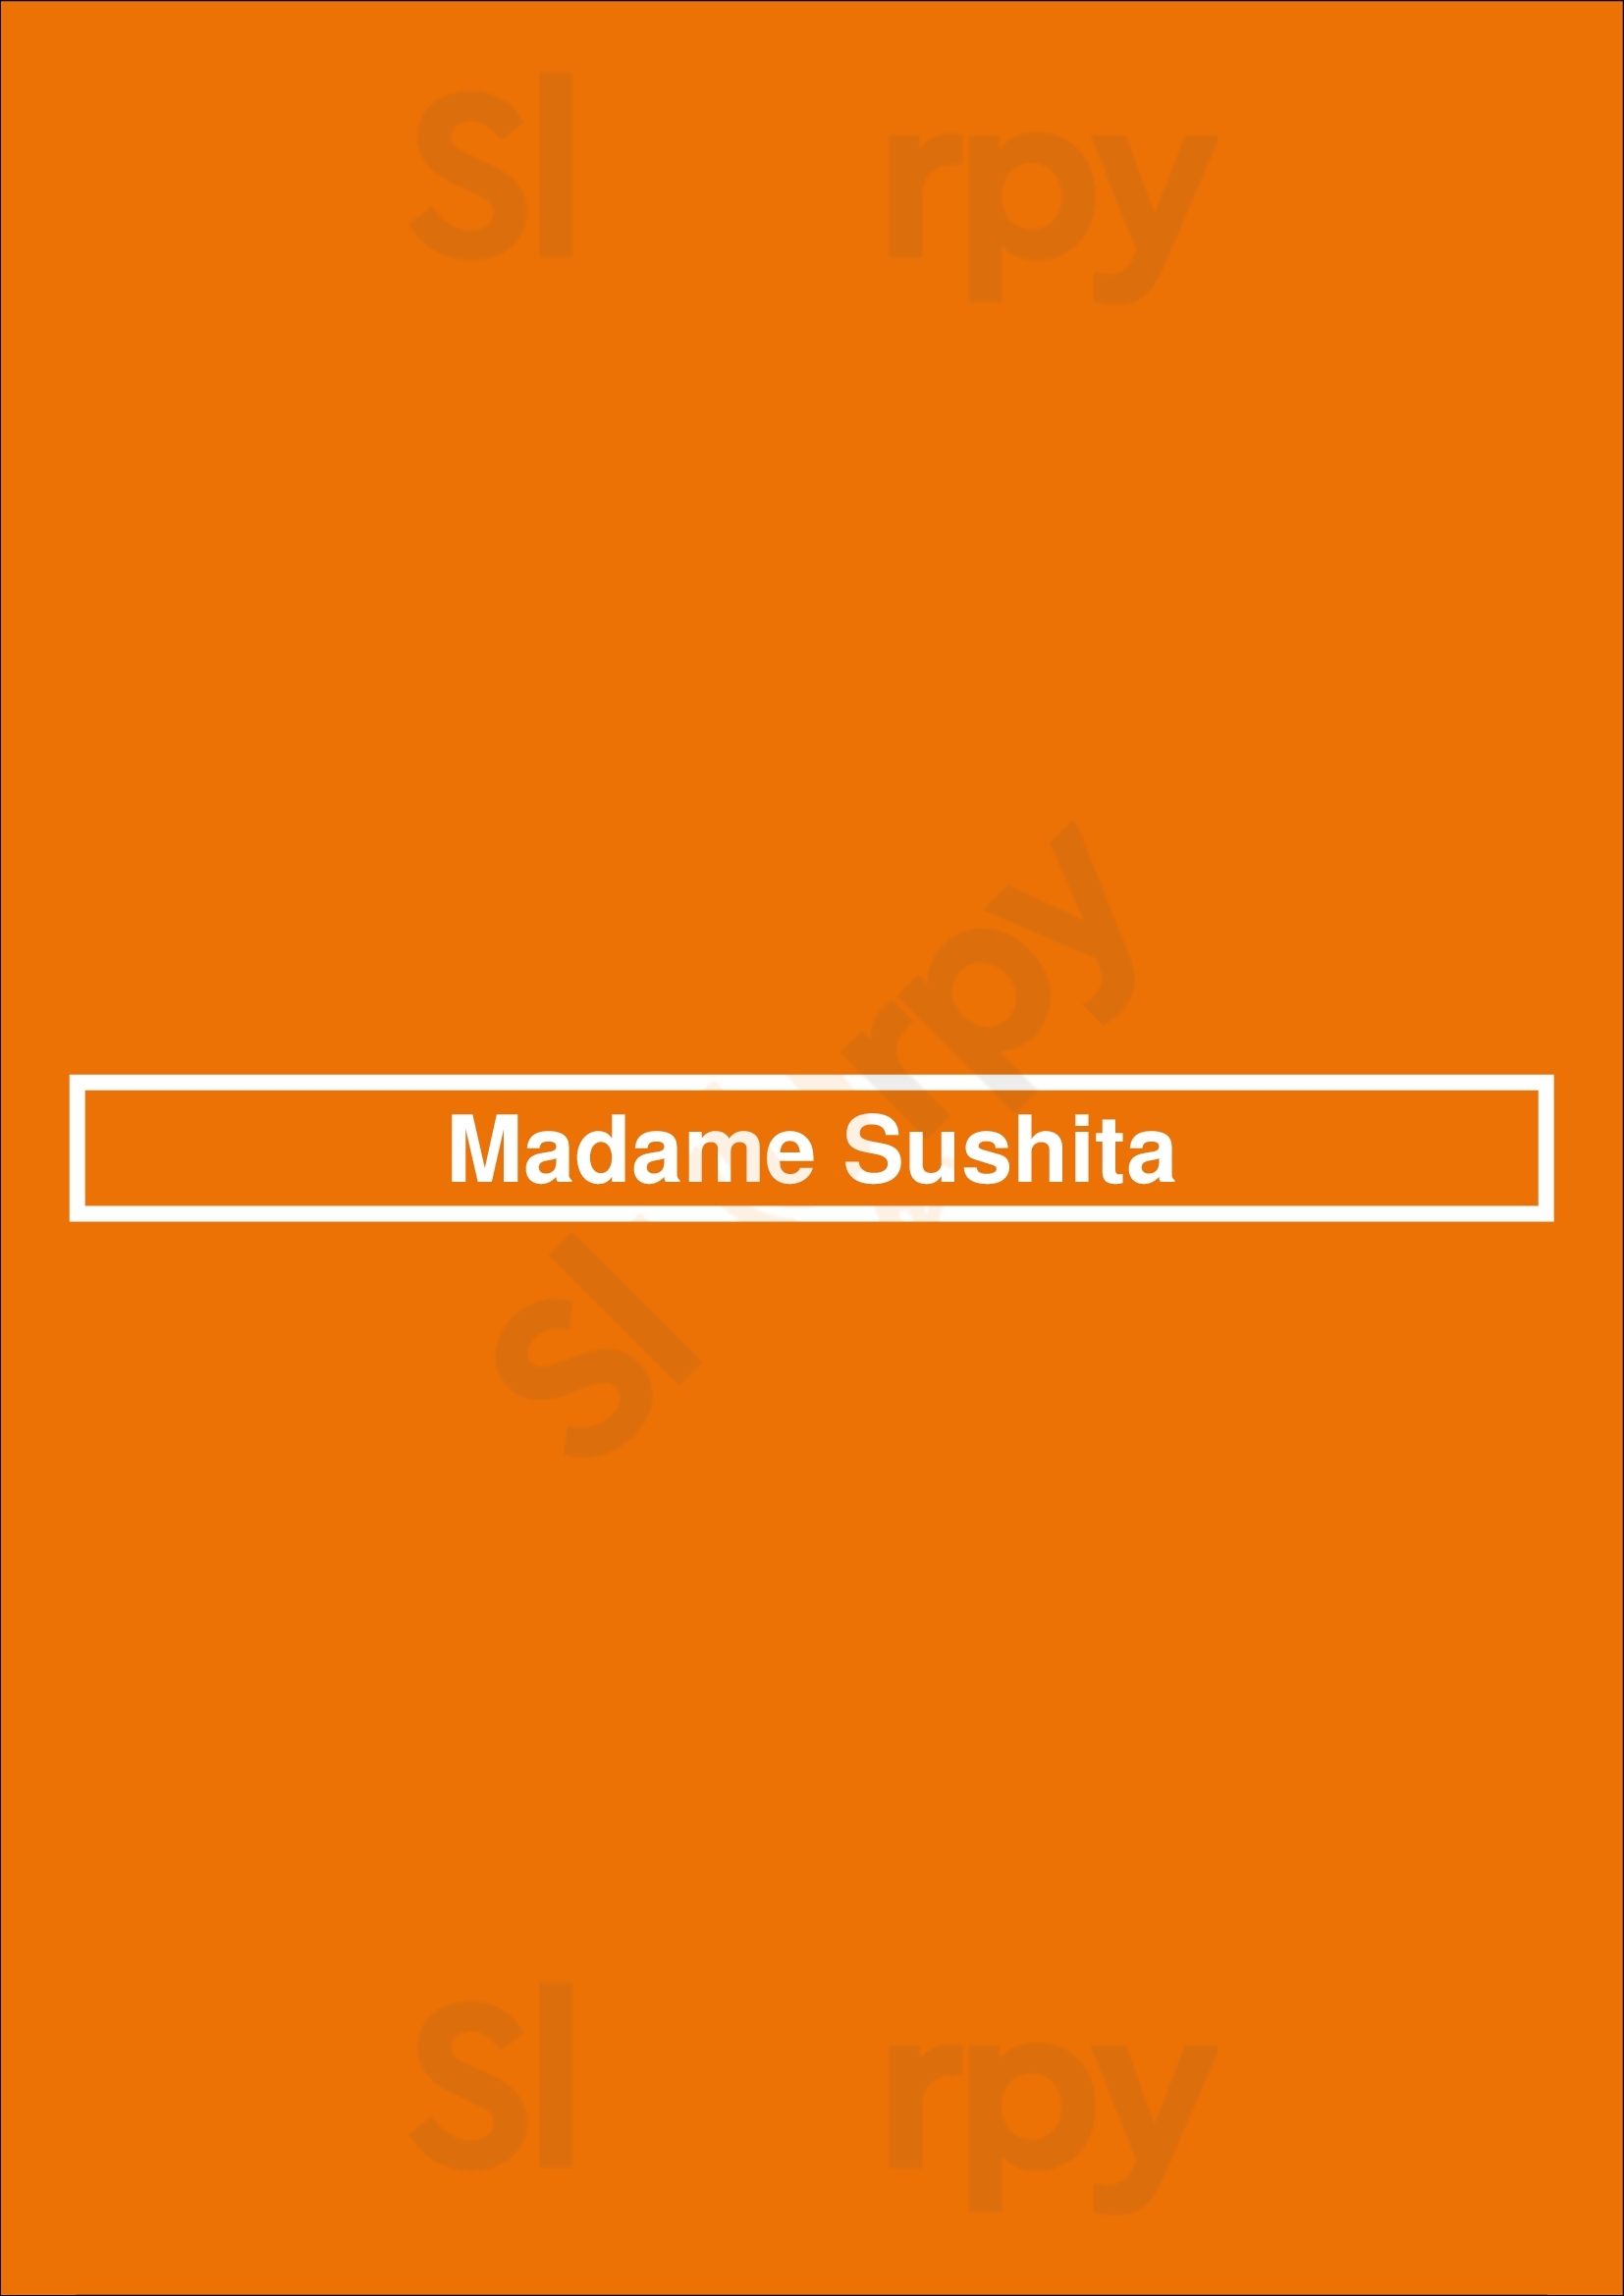 Madame Sushita Madrid Menu - 1